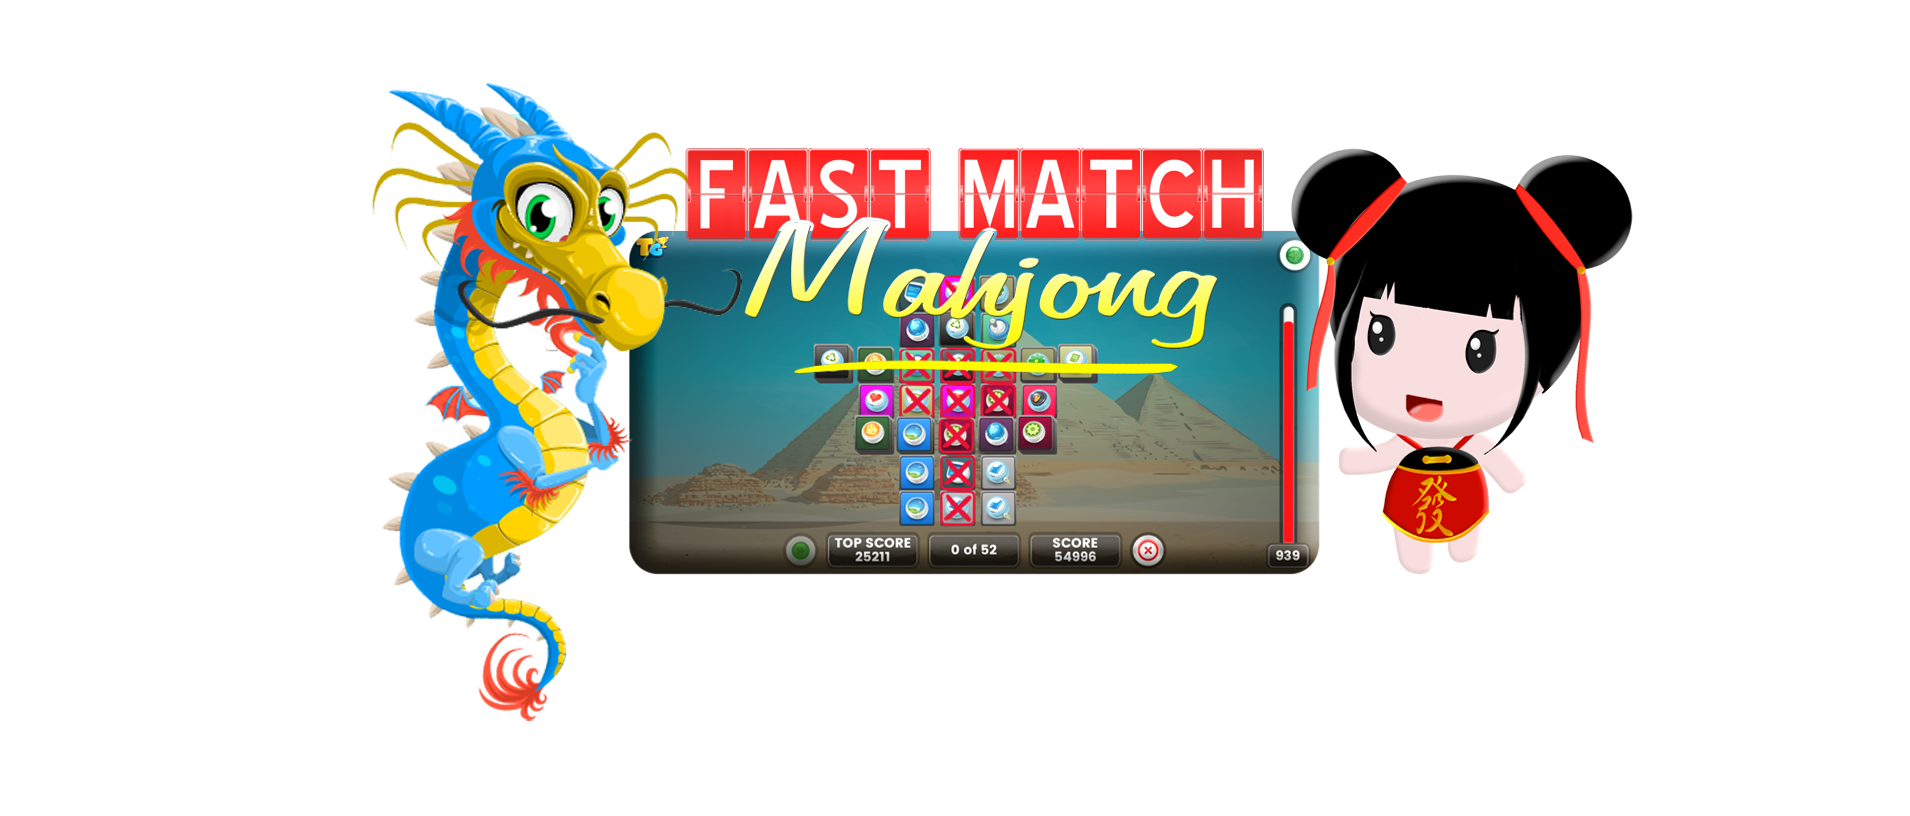 Mahjong Online Game Tournaments